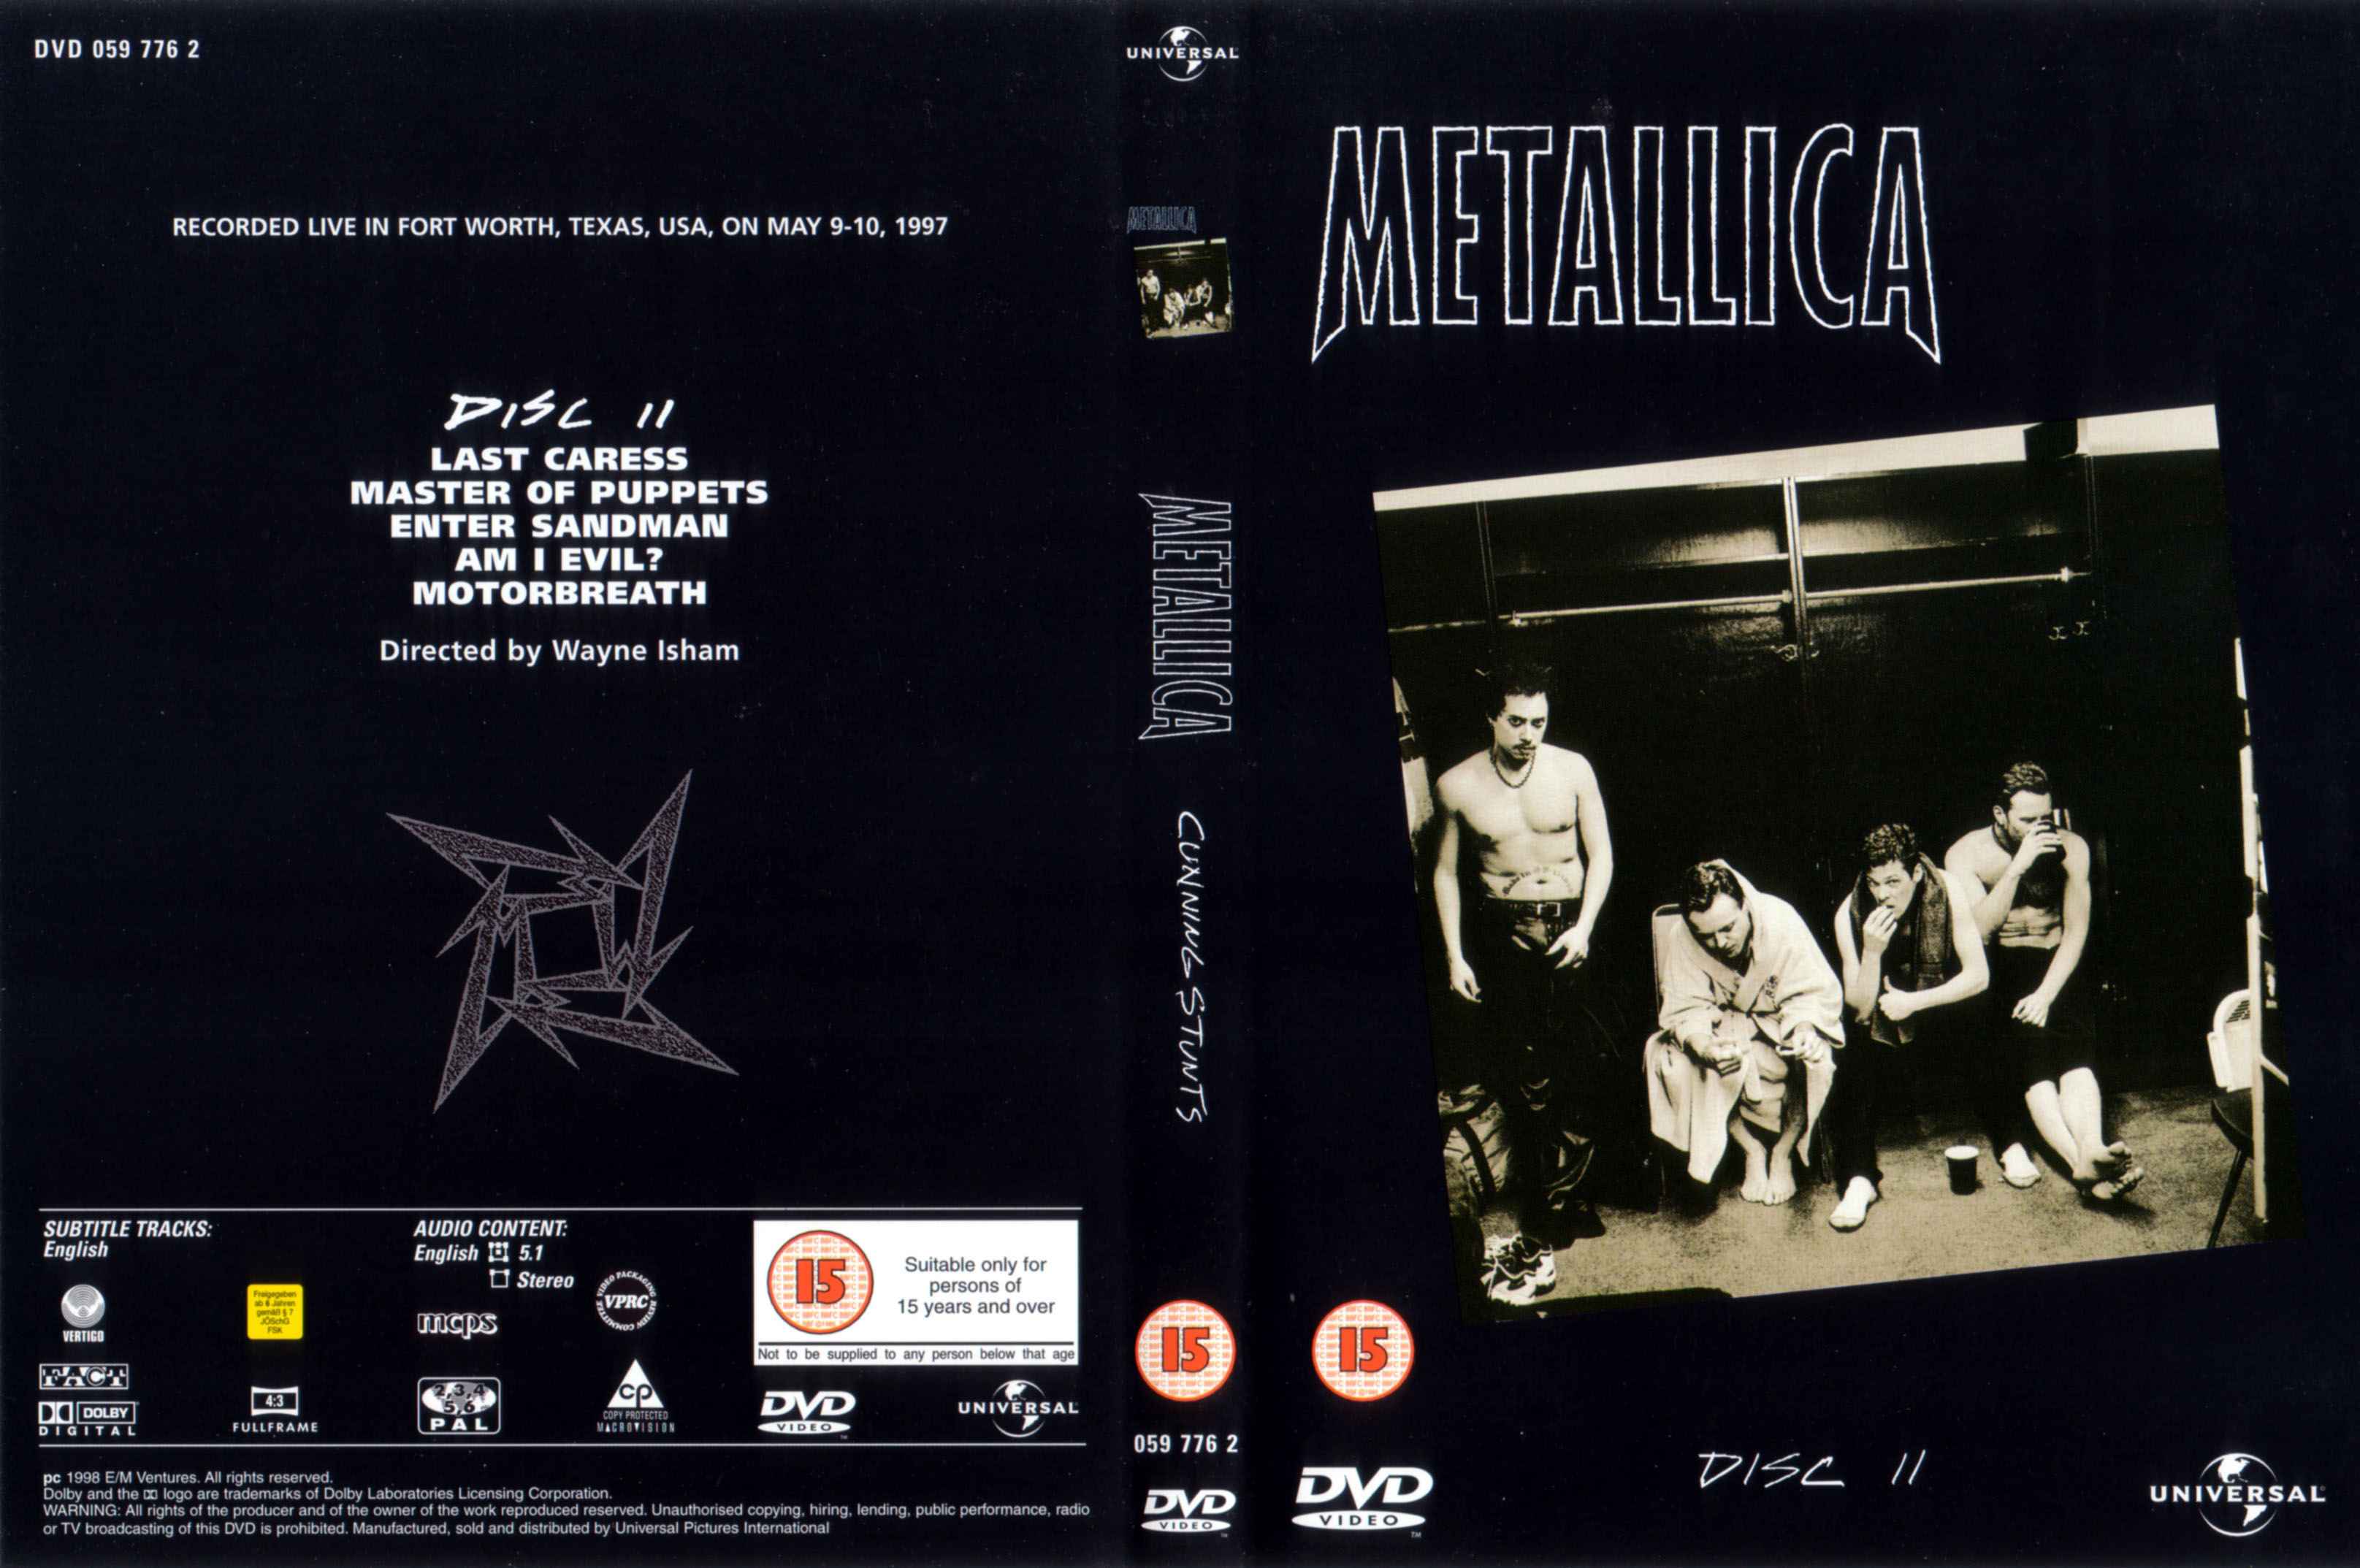 Jaquette DVD Metallica cunning stunts disc 2